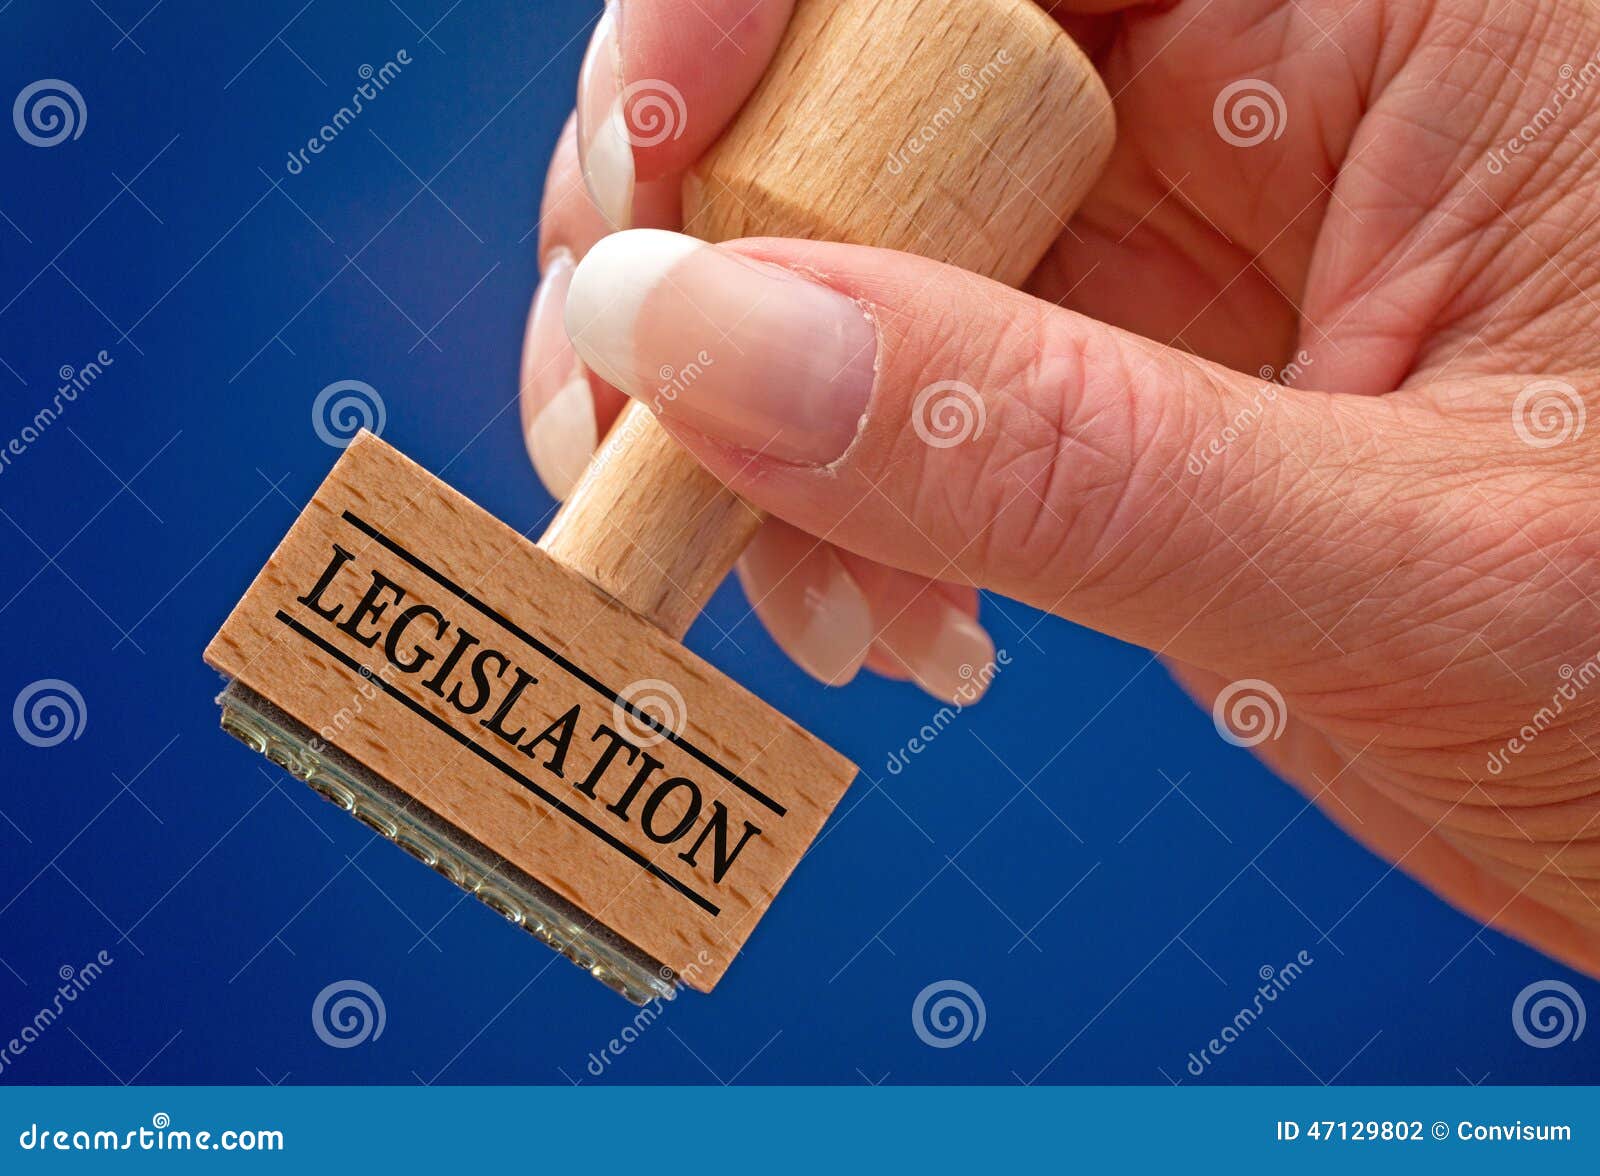 legislation hand stamp